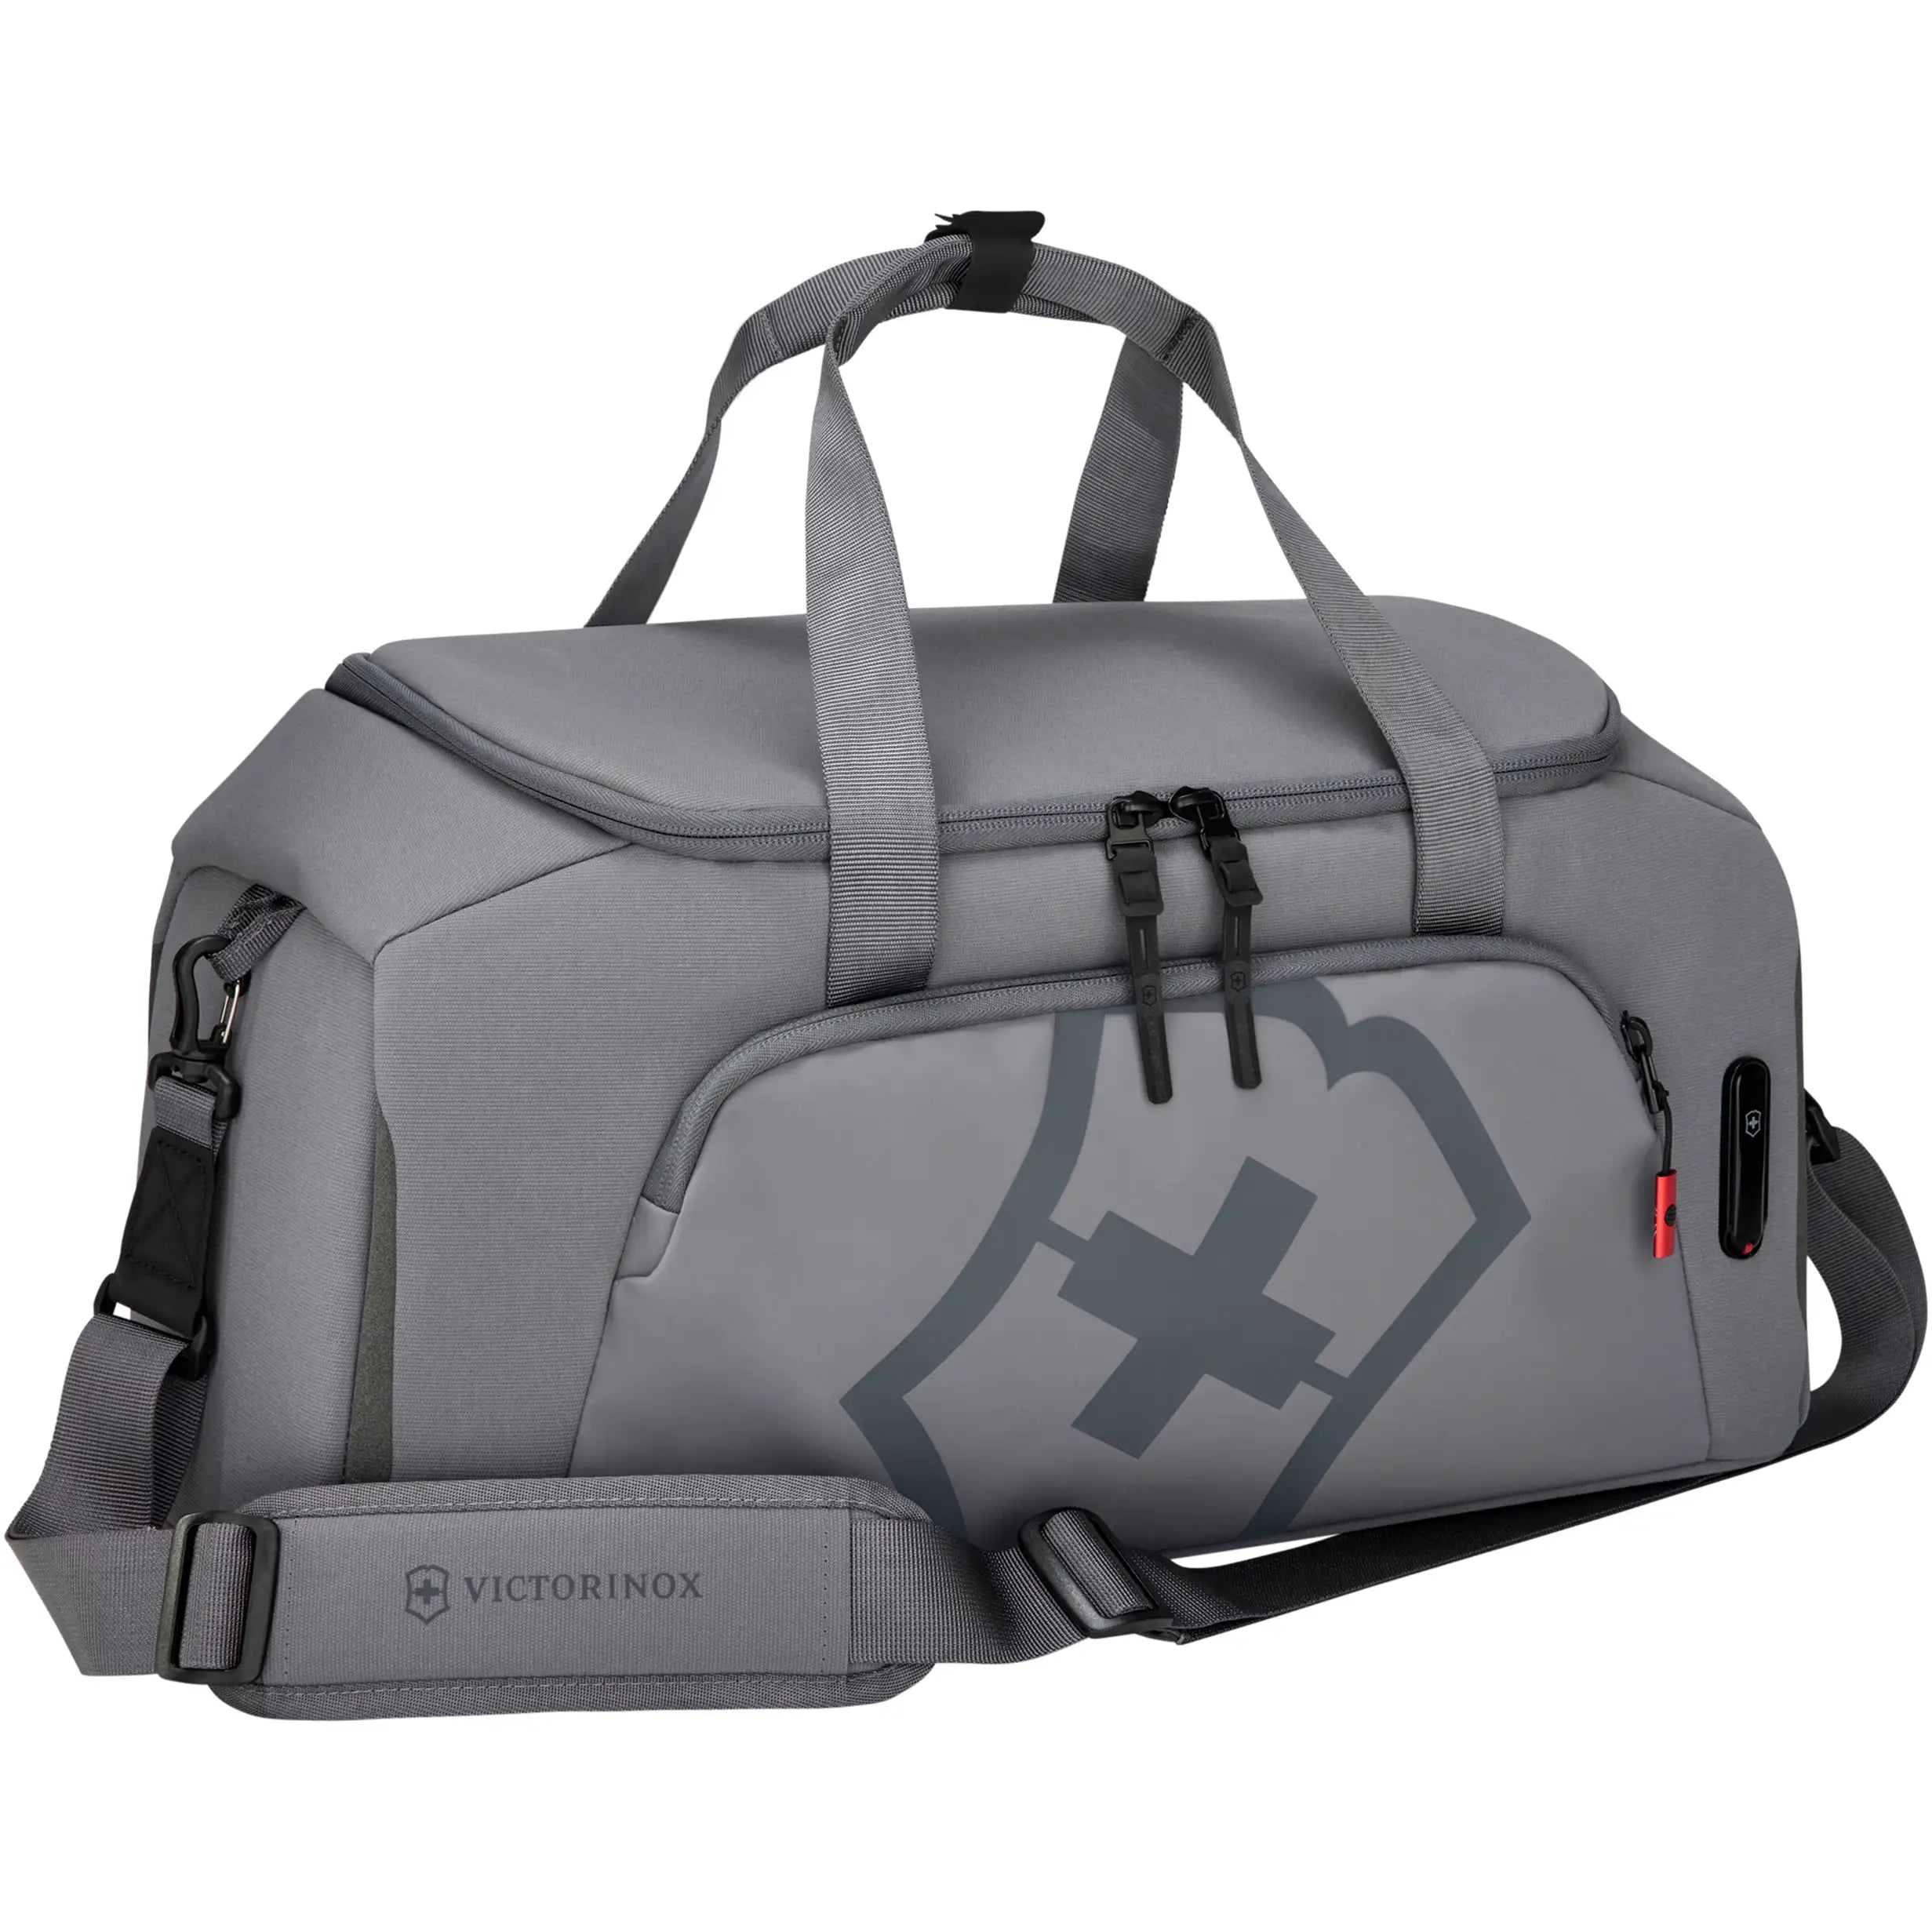 Victorinox Touring 2.0 Sports Duffel Travel Bag 50 cm - Stone Grey